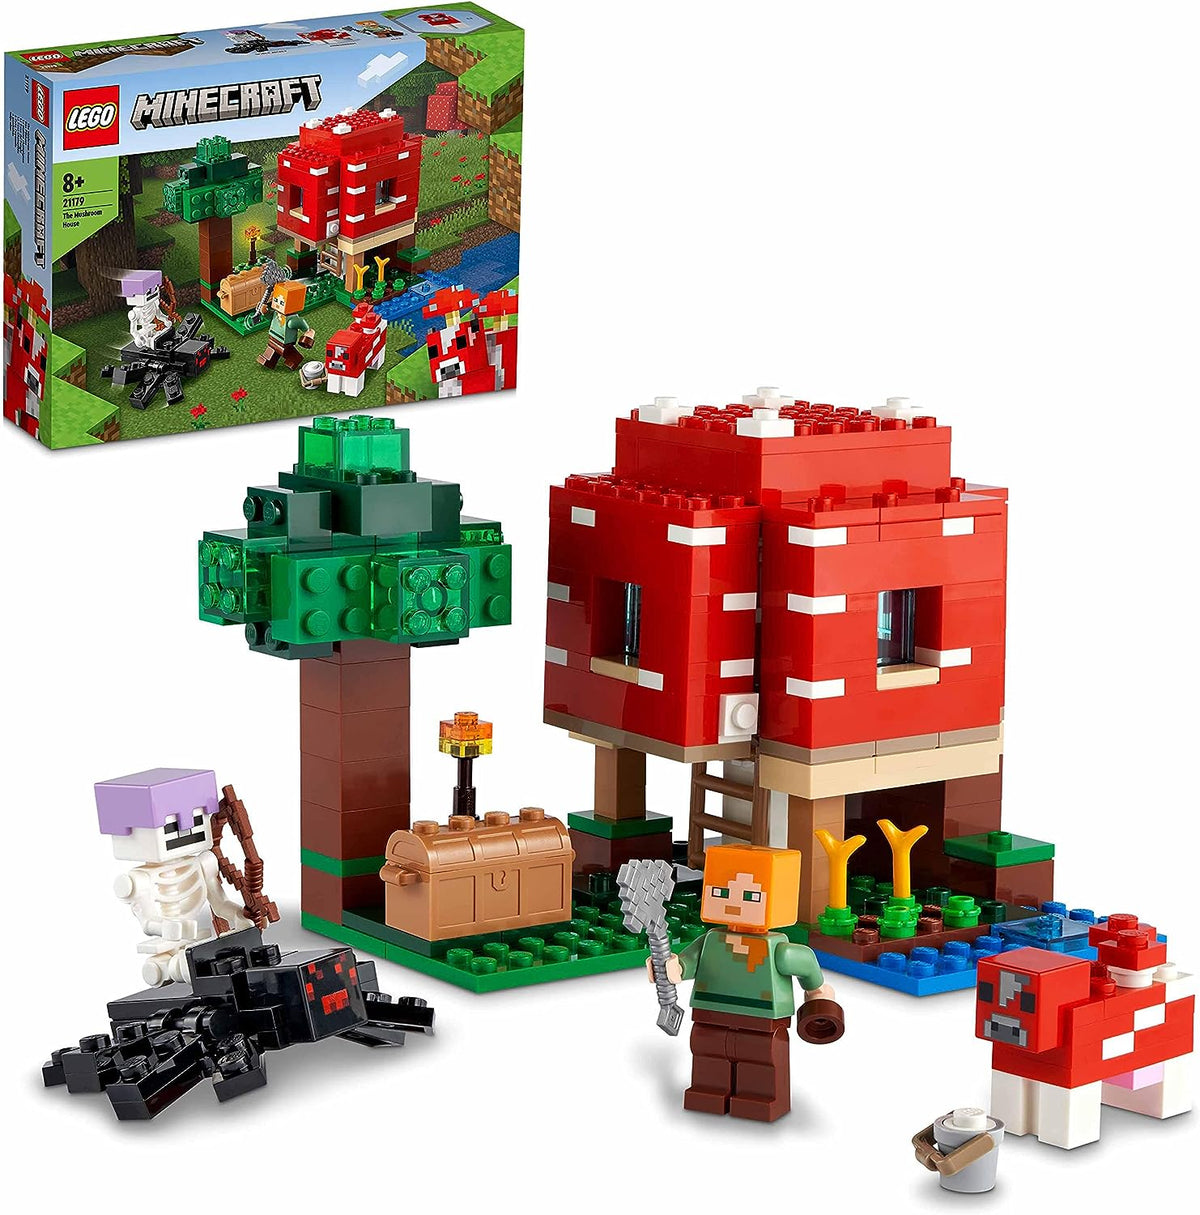 LEGO Minecraft The Mushroom House Toy for Kids 21179 + Large LEGO Storage Head - Bundle